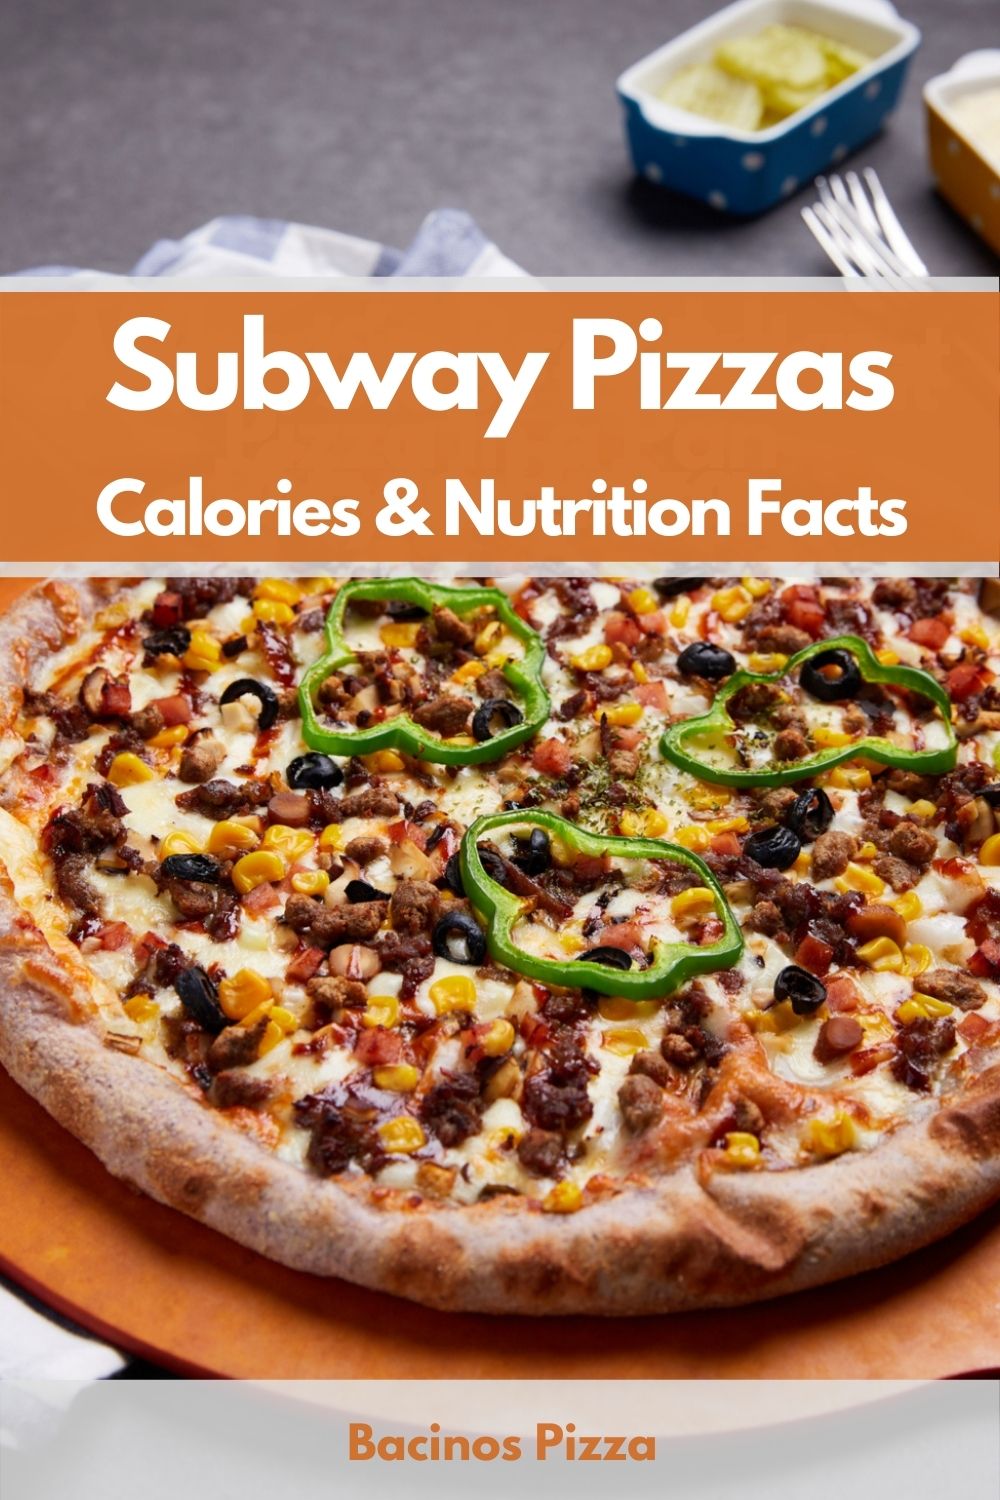 Subway Pizzas Calories & Nutrition Facts pin